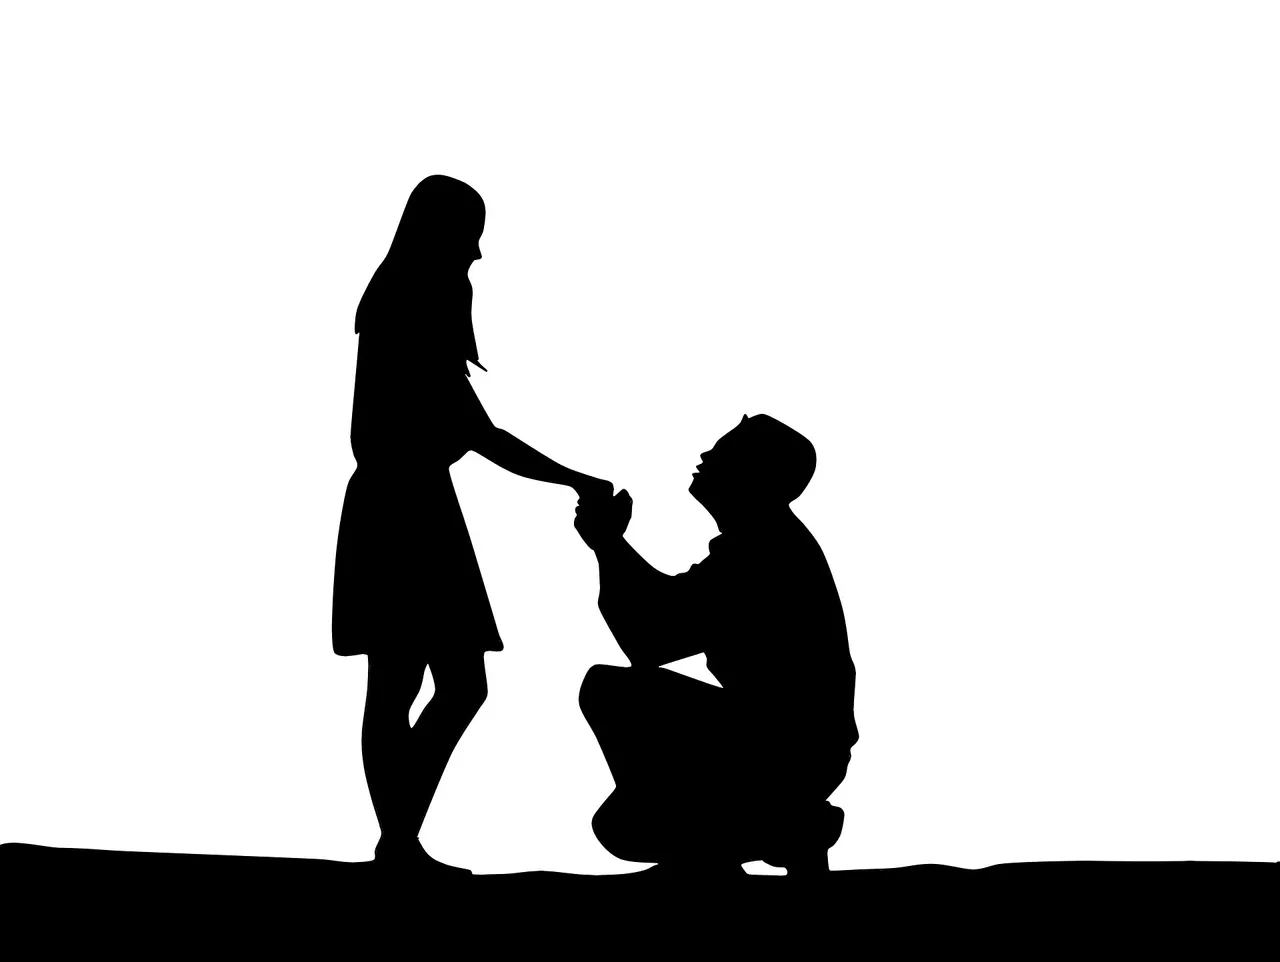 marriage-proposal-gce851a713_1920.jpg